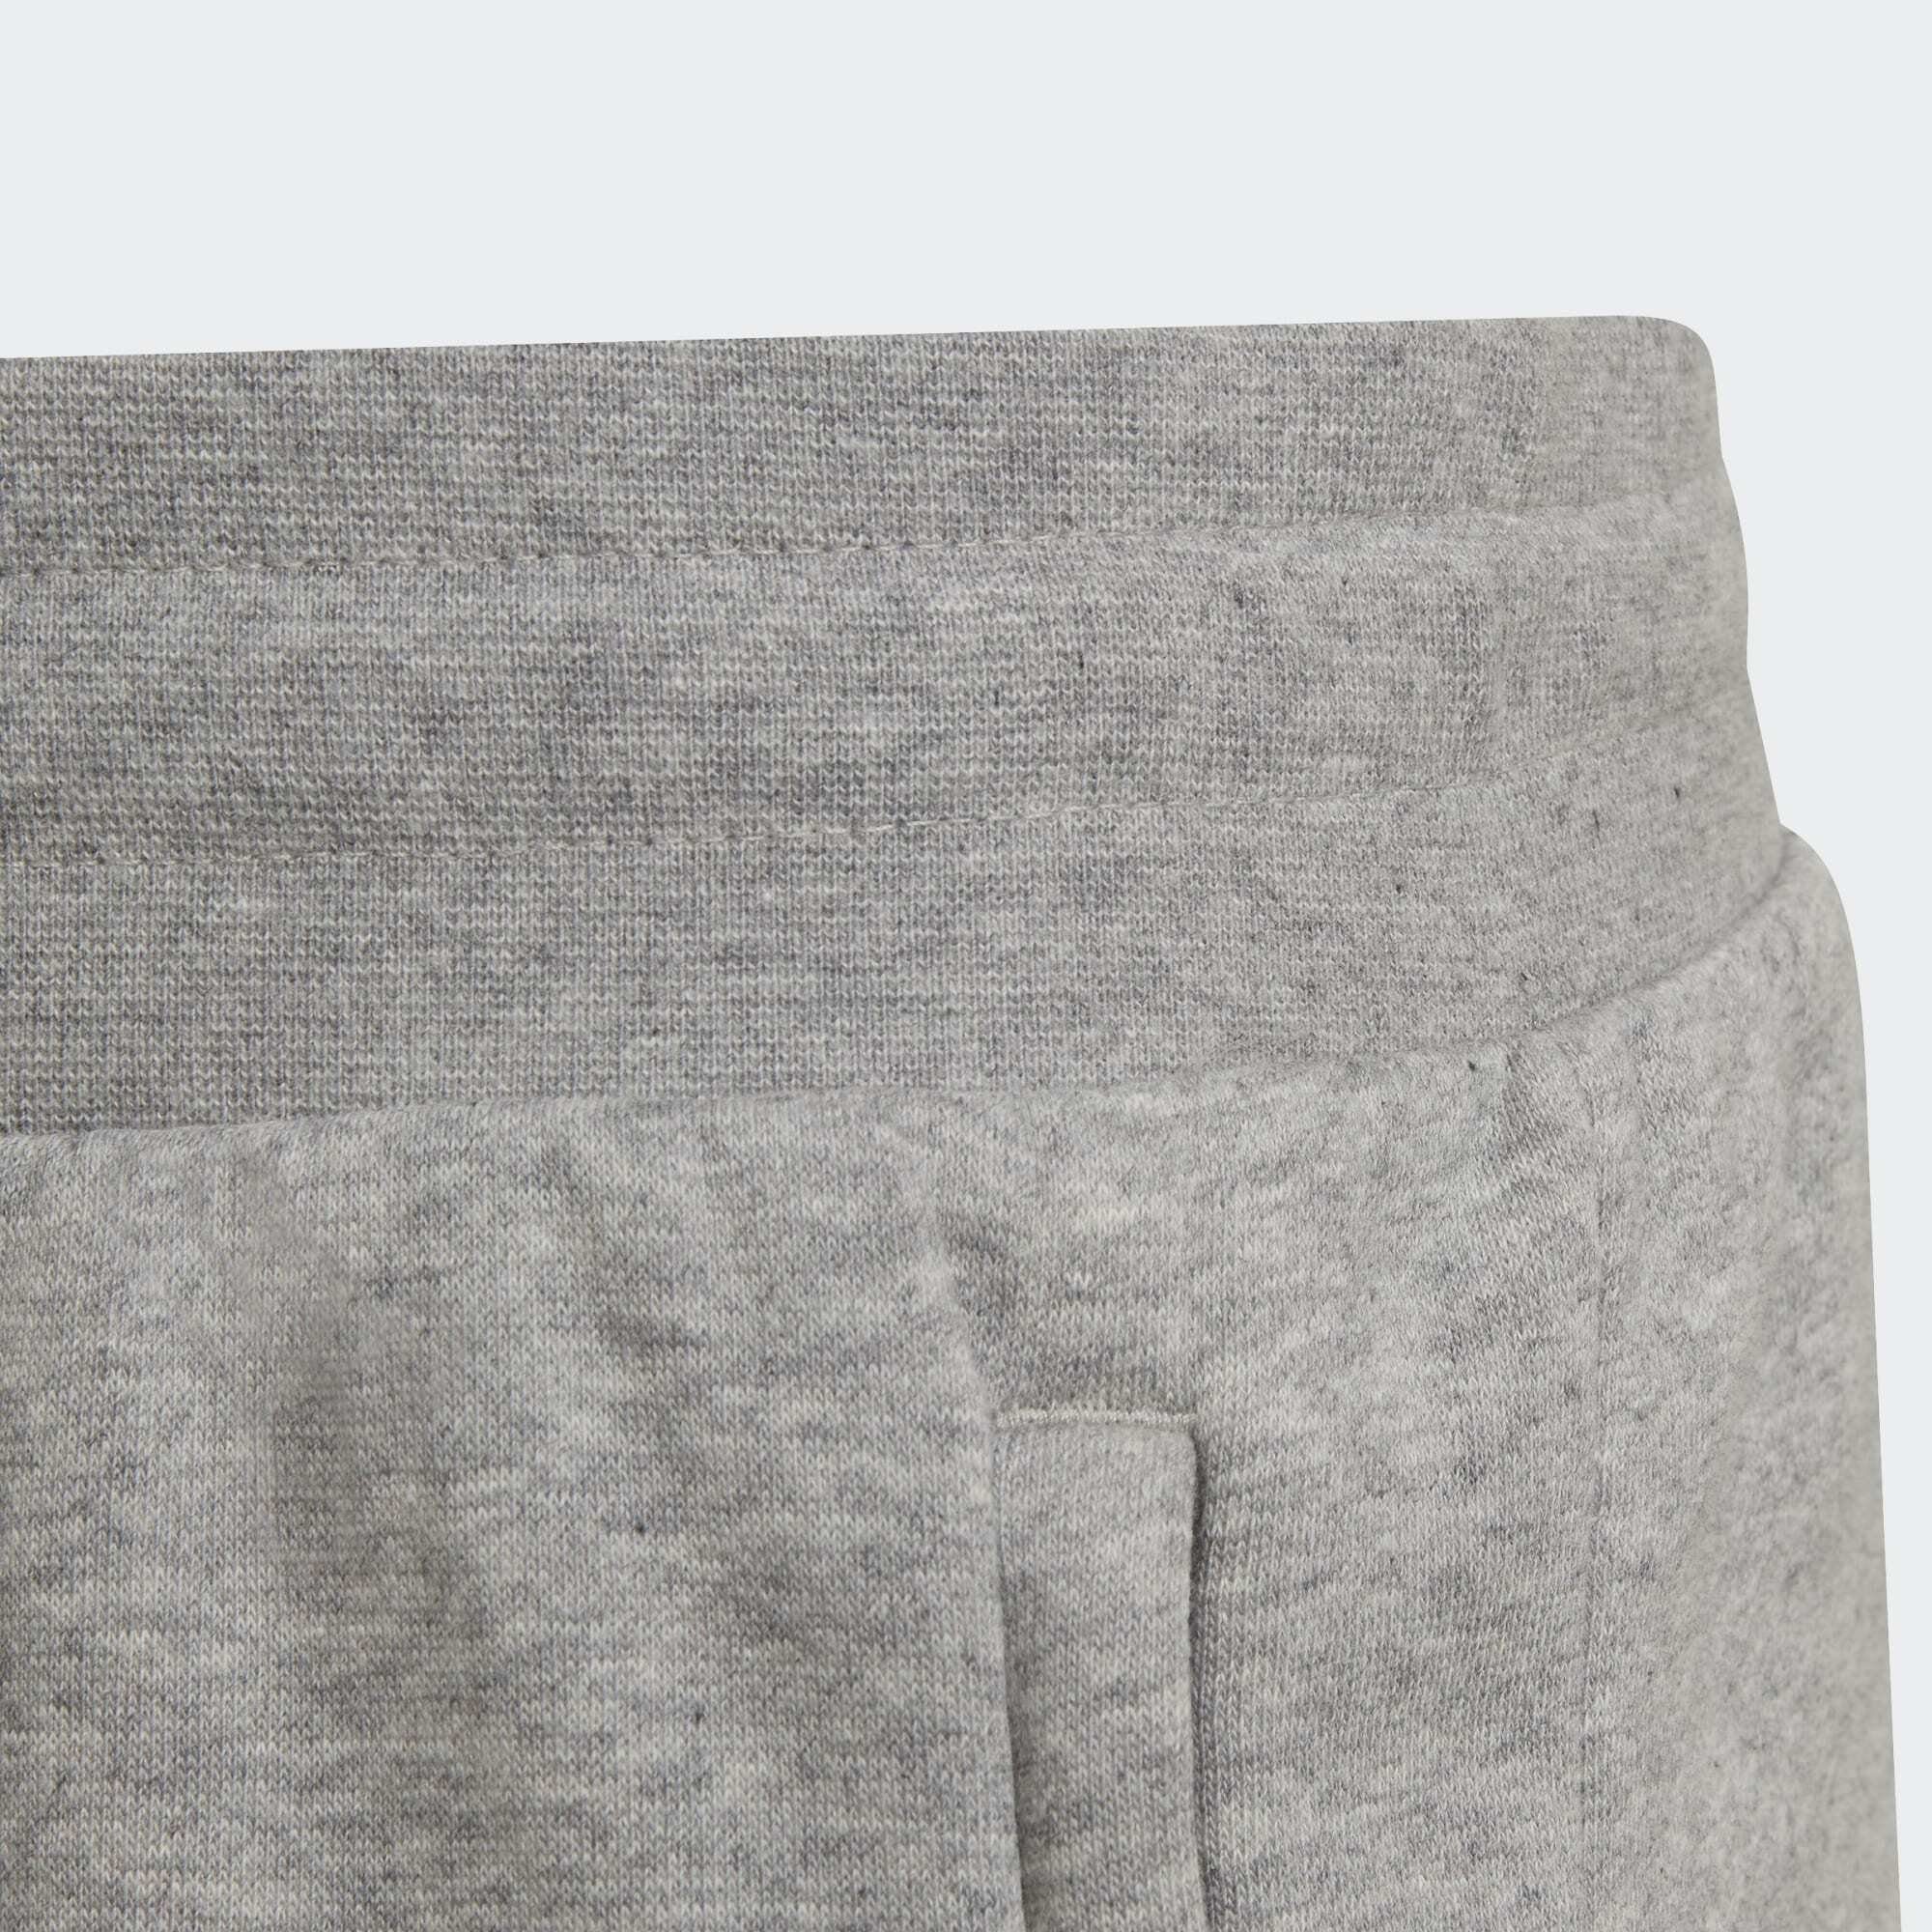 adidas ADICOLOR Heather Originals Shorts Medium SHORTS Grey